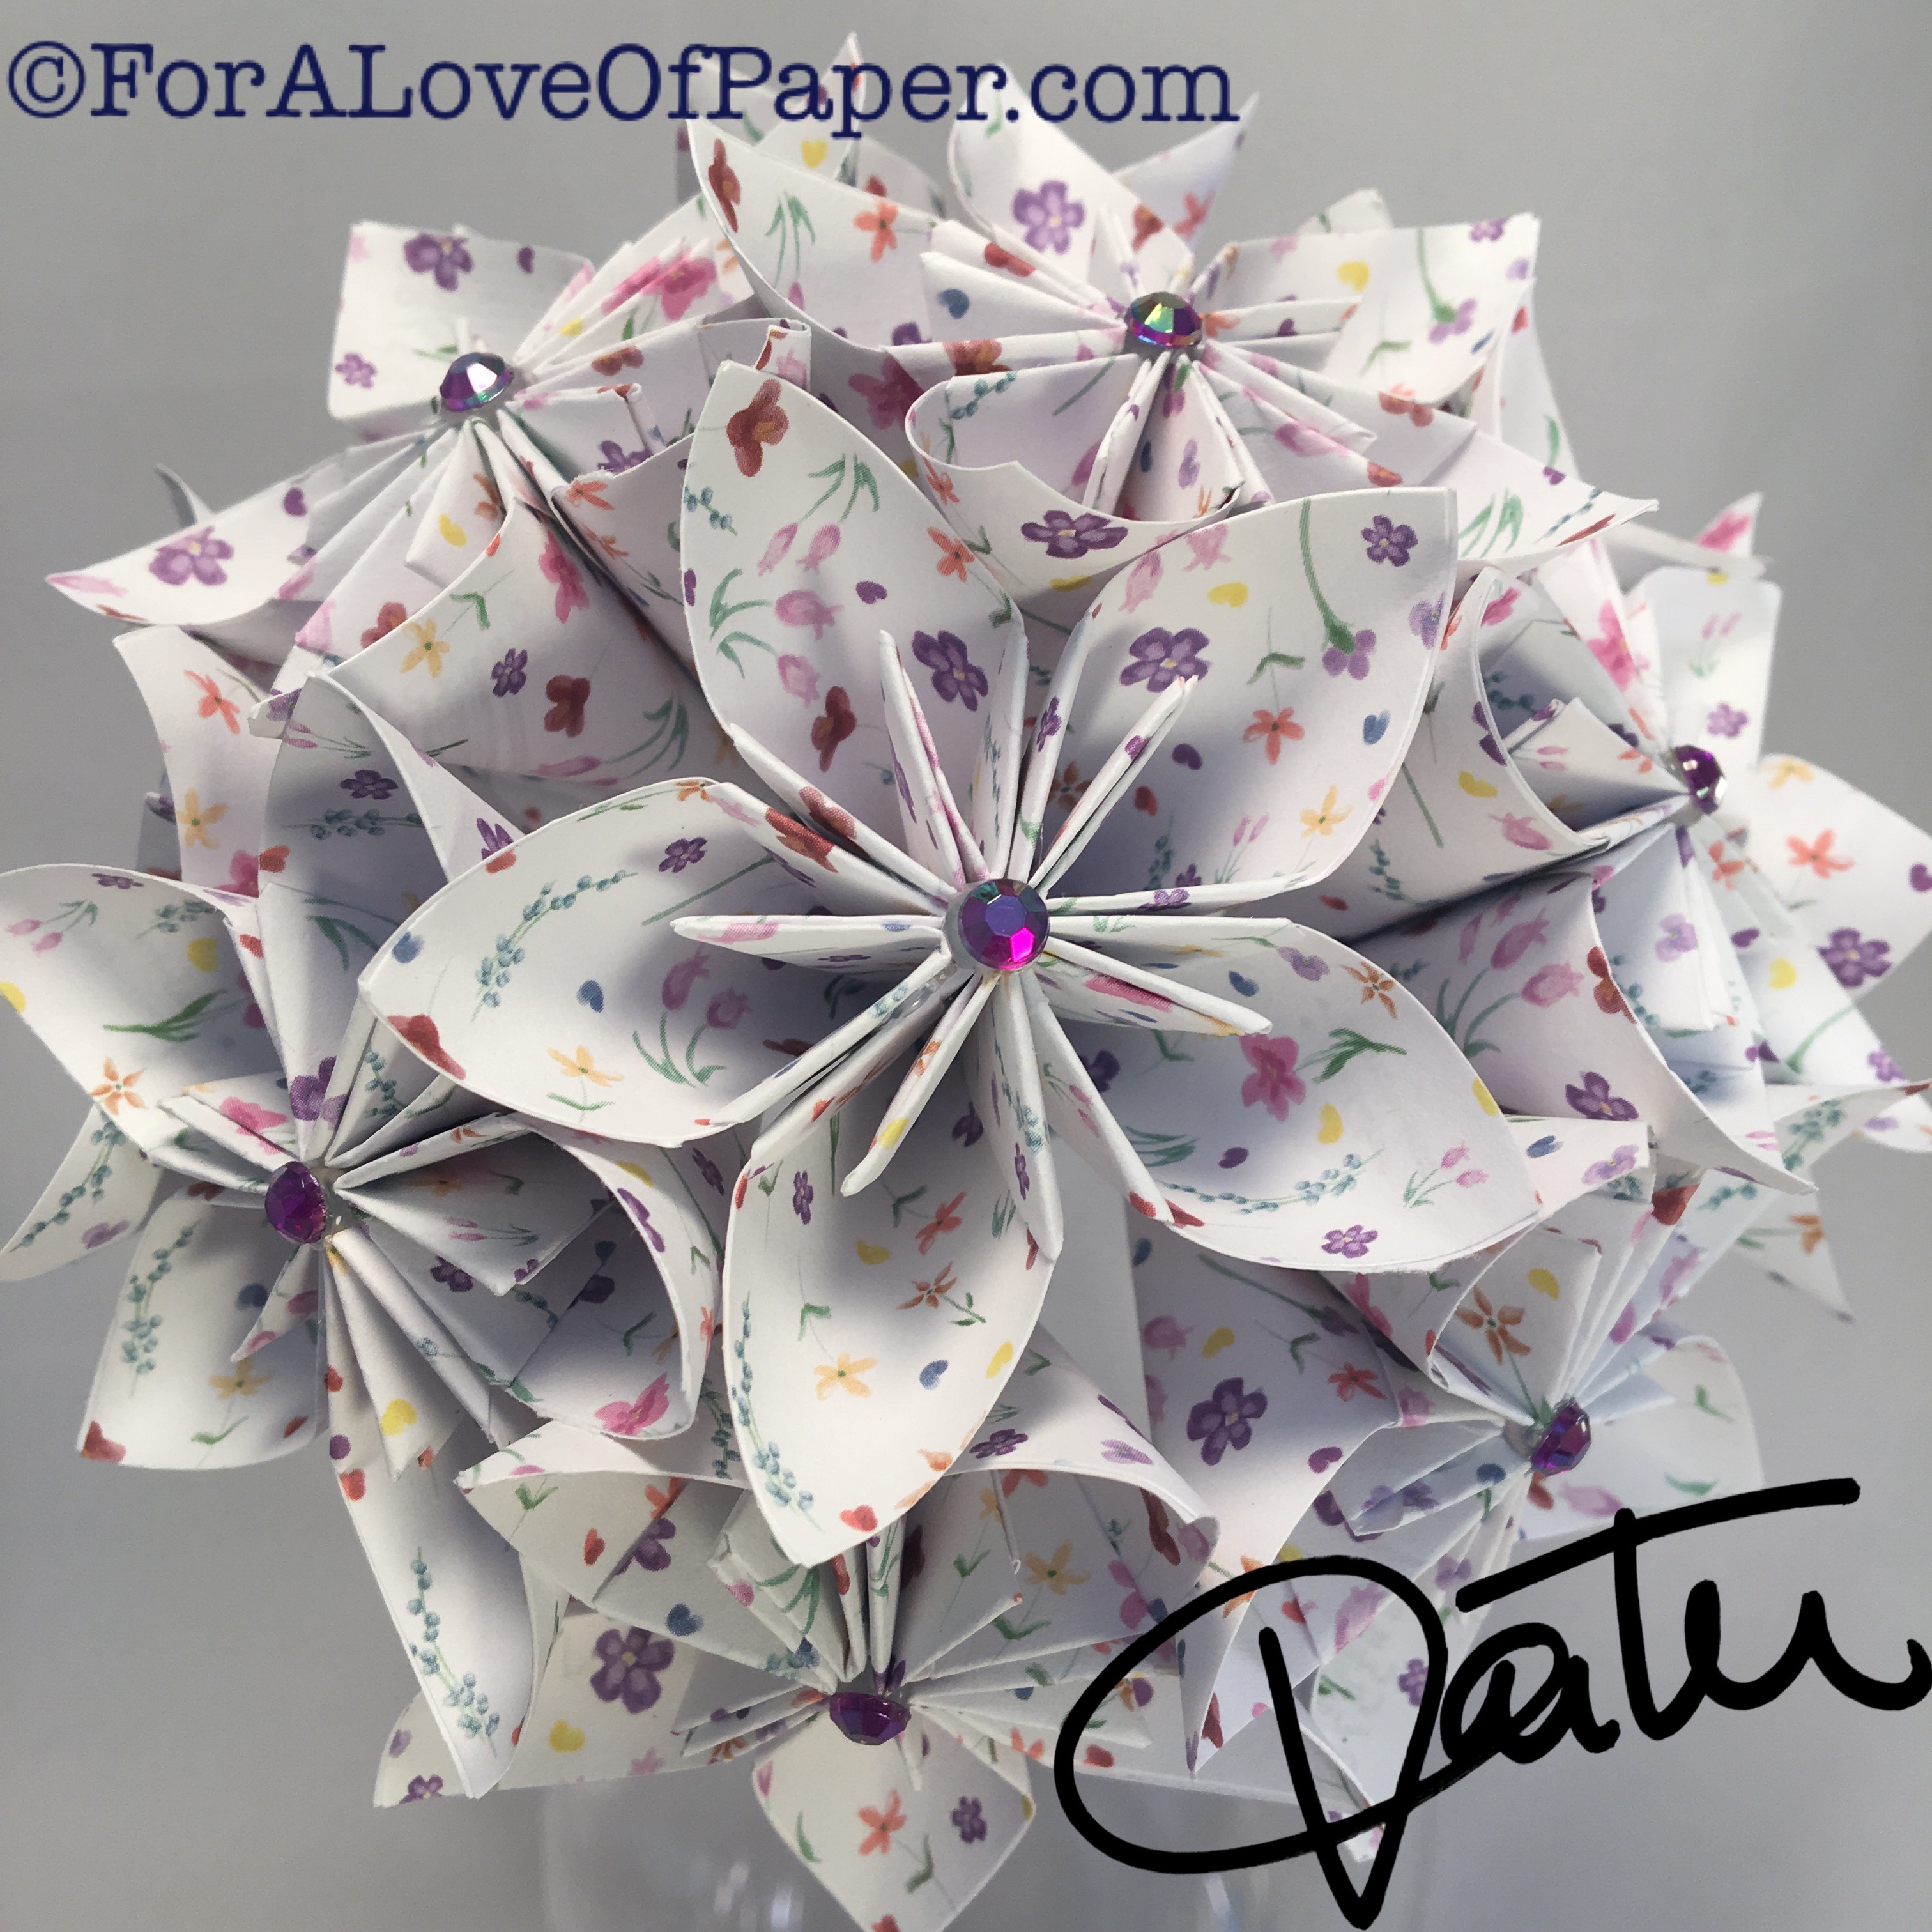 Paper flowers using small purple print paper